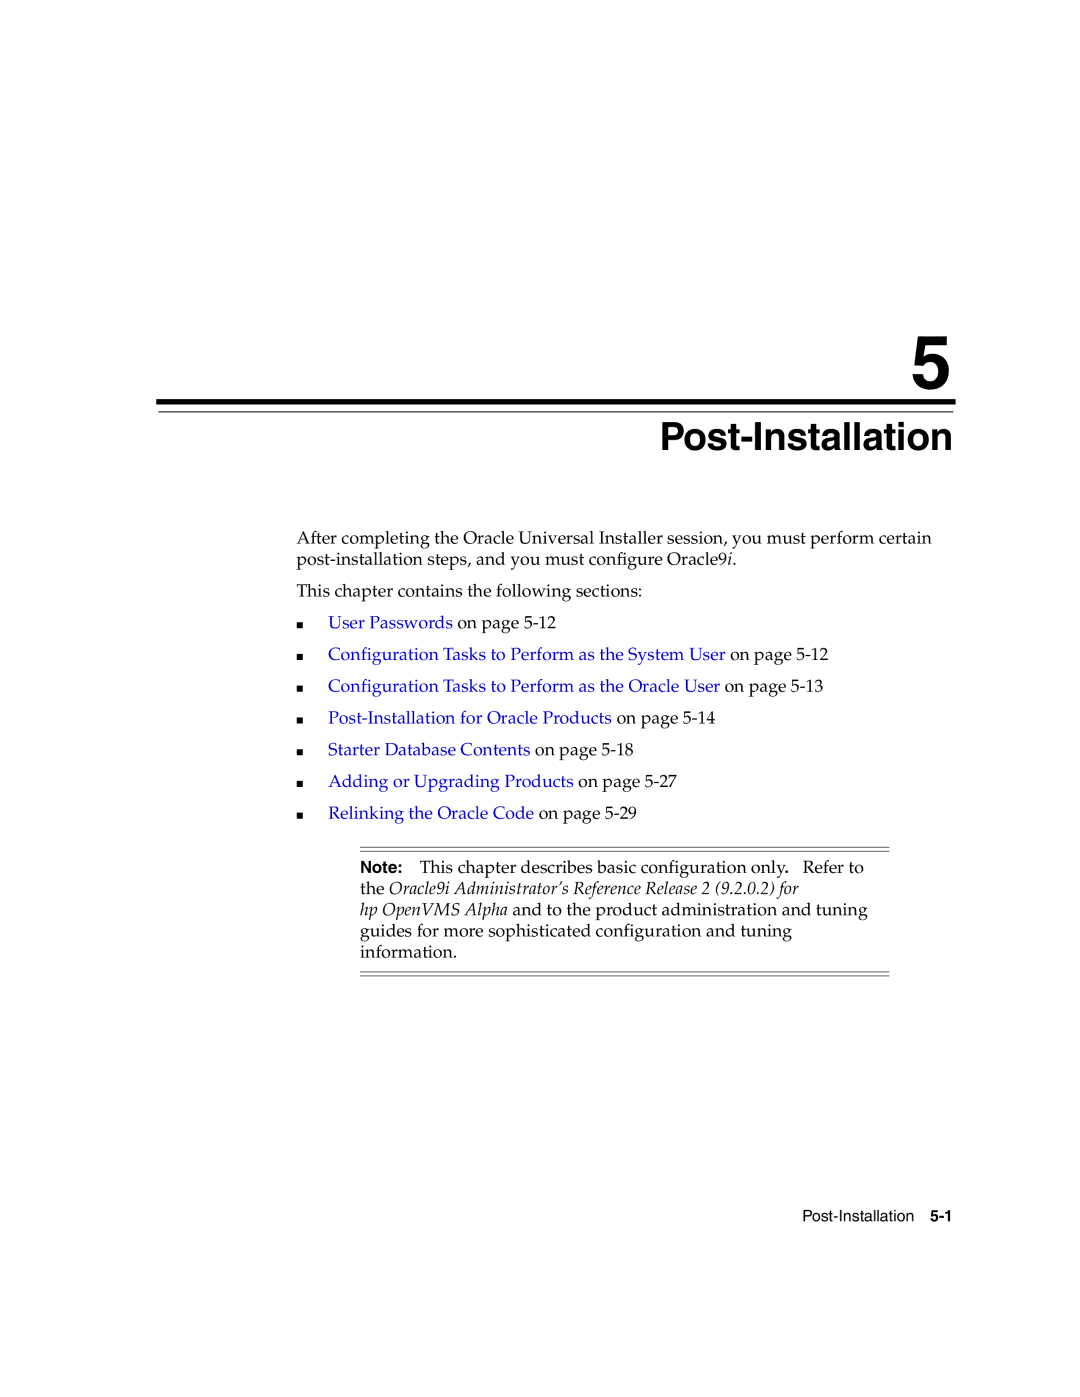 Oracle Audio Technologies B10508-01 manual Post-Installation 